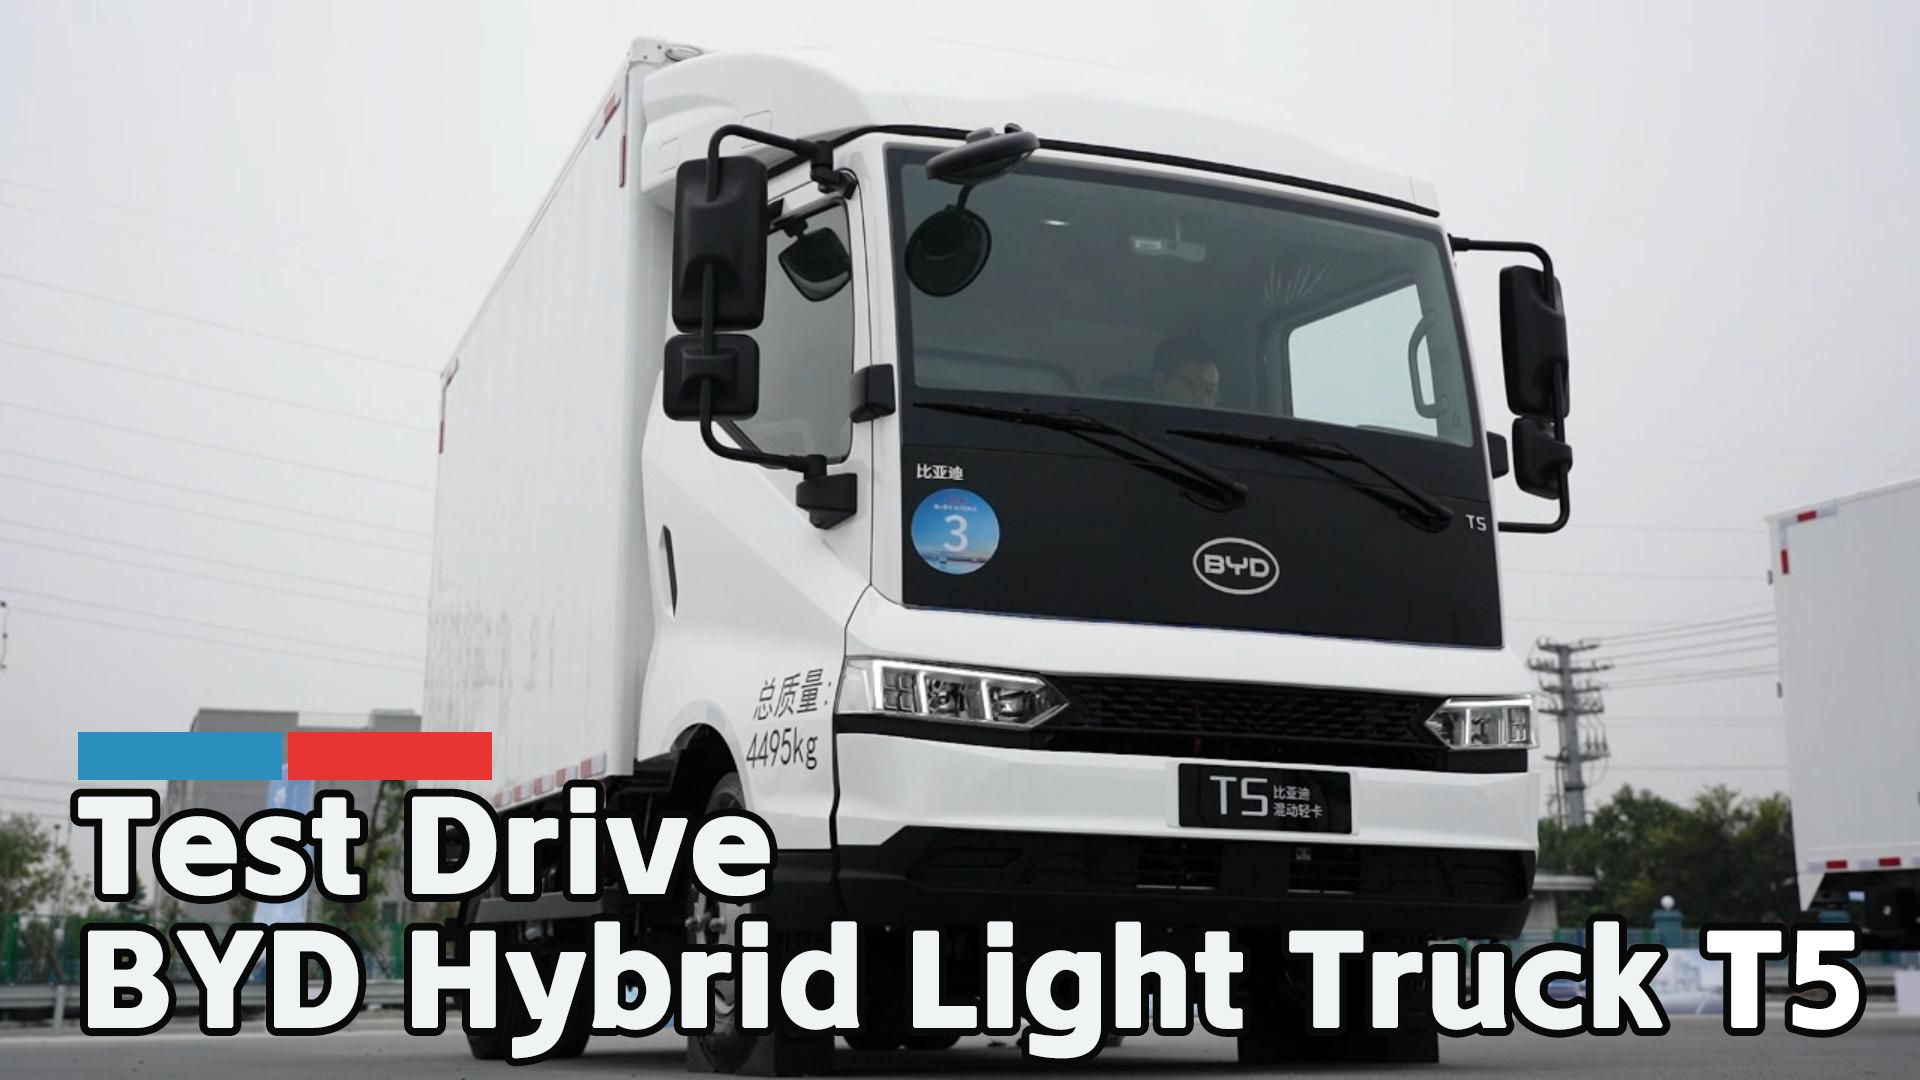 Test Drive BYD Hybrid Light Truck T5